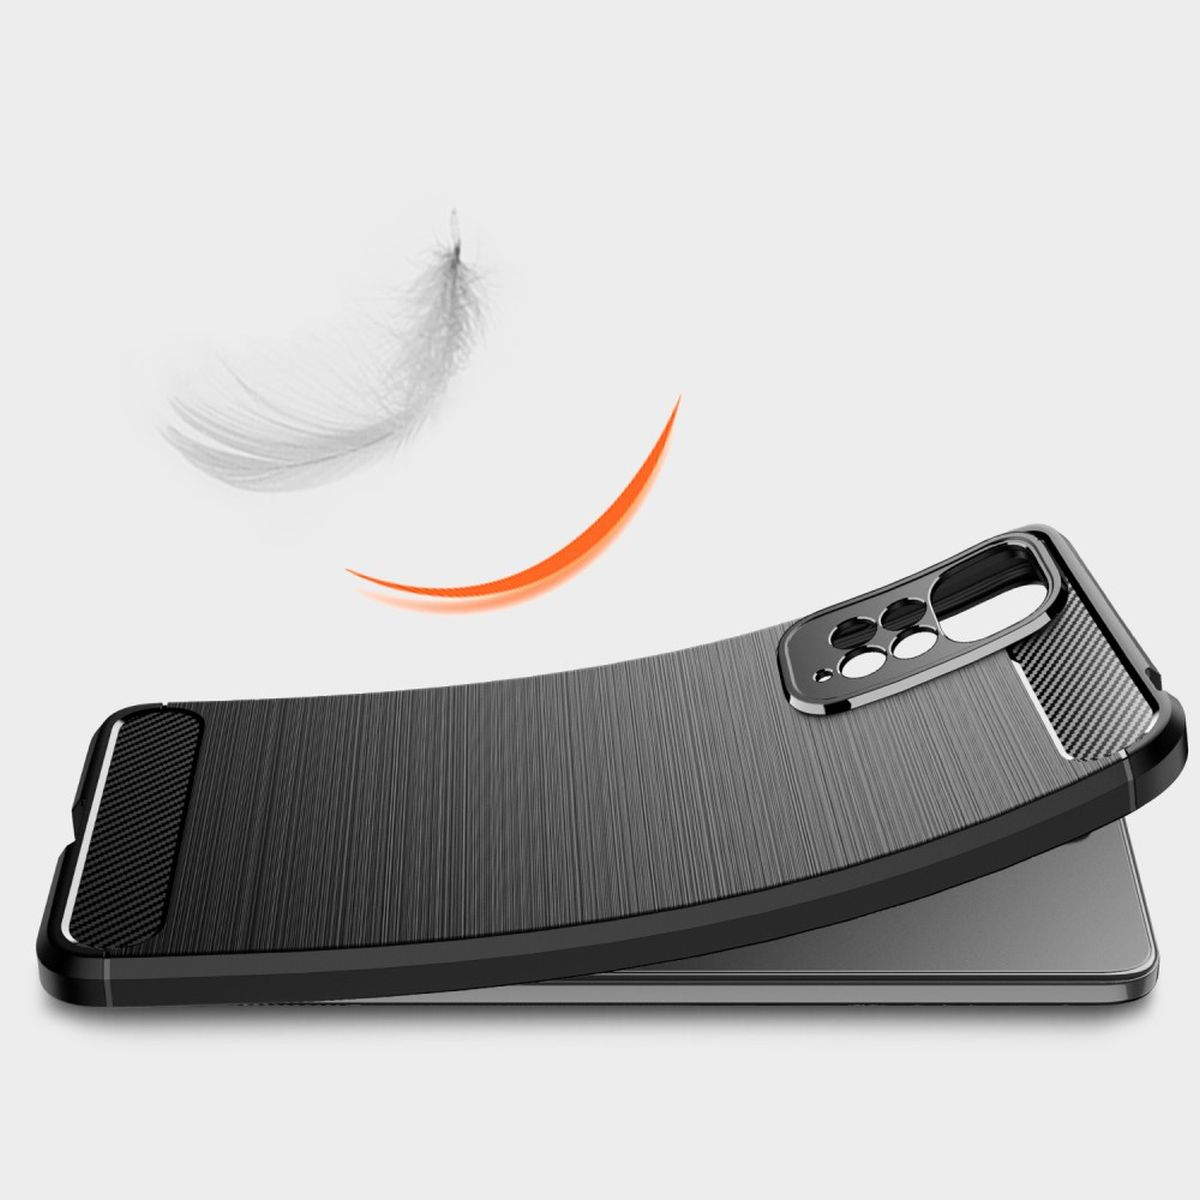 COVERKINGZ Handy Case Xiaomi, Note 4G/5G, Carbon Backcover, Pro Redmi Schwarz im 11 look